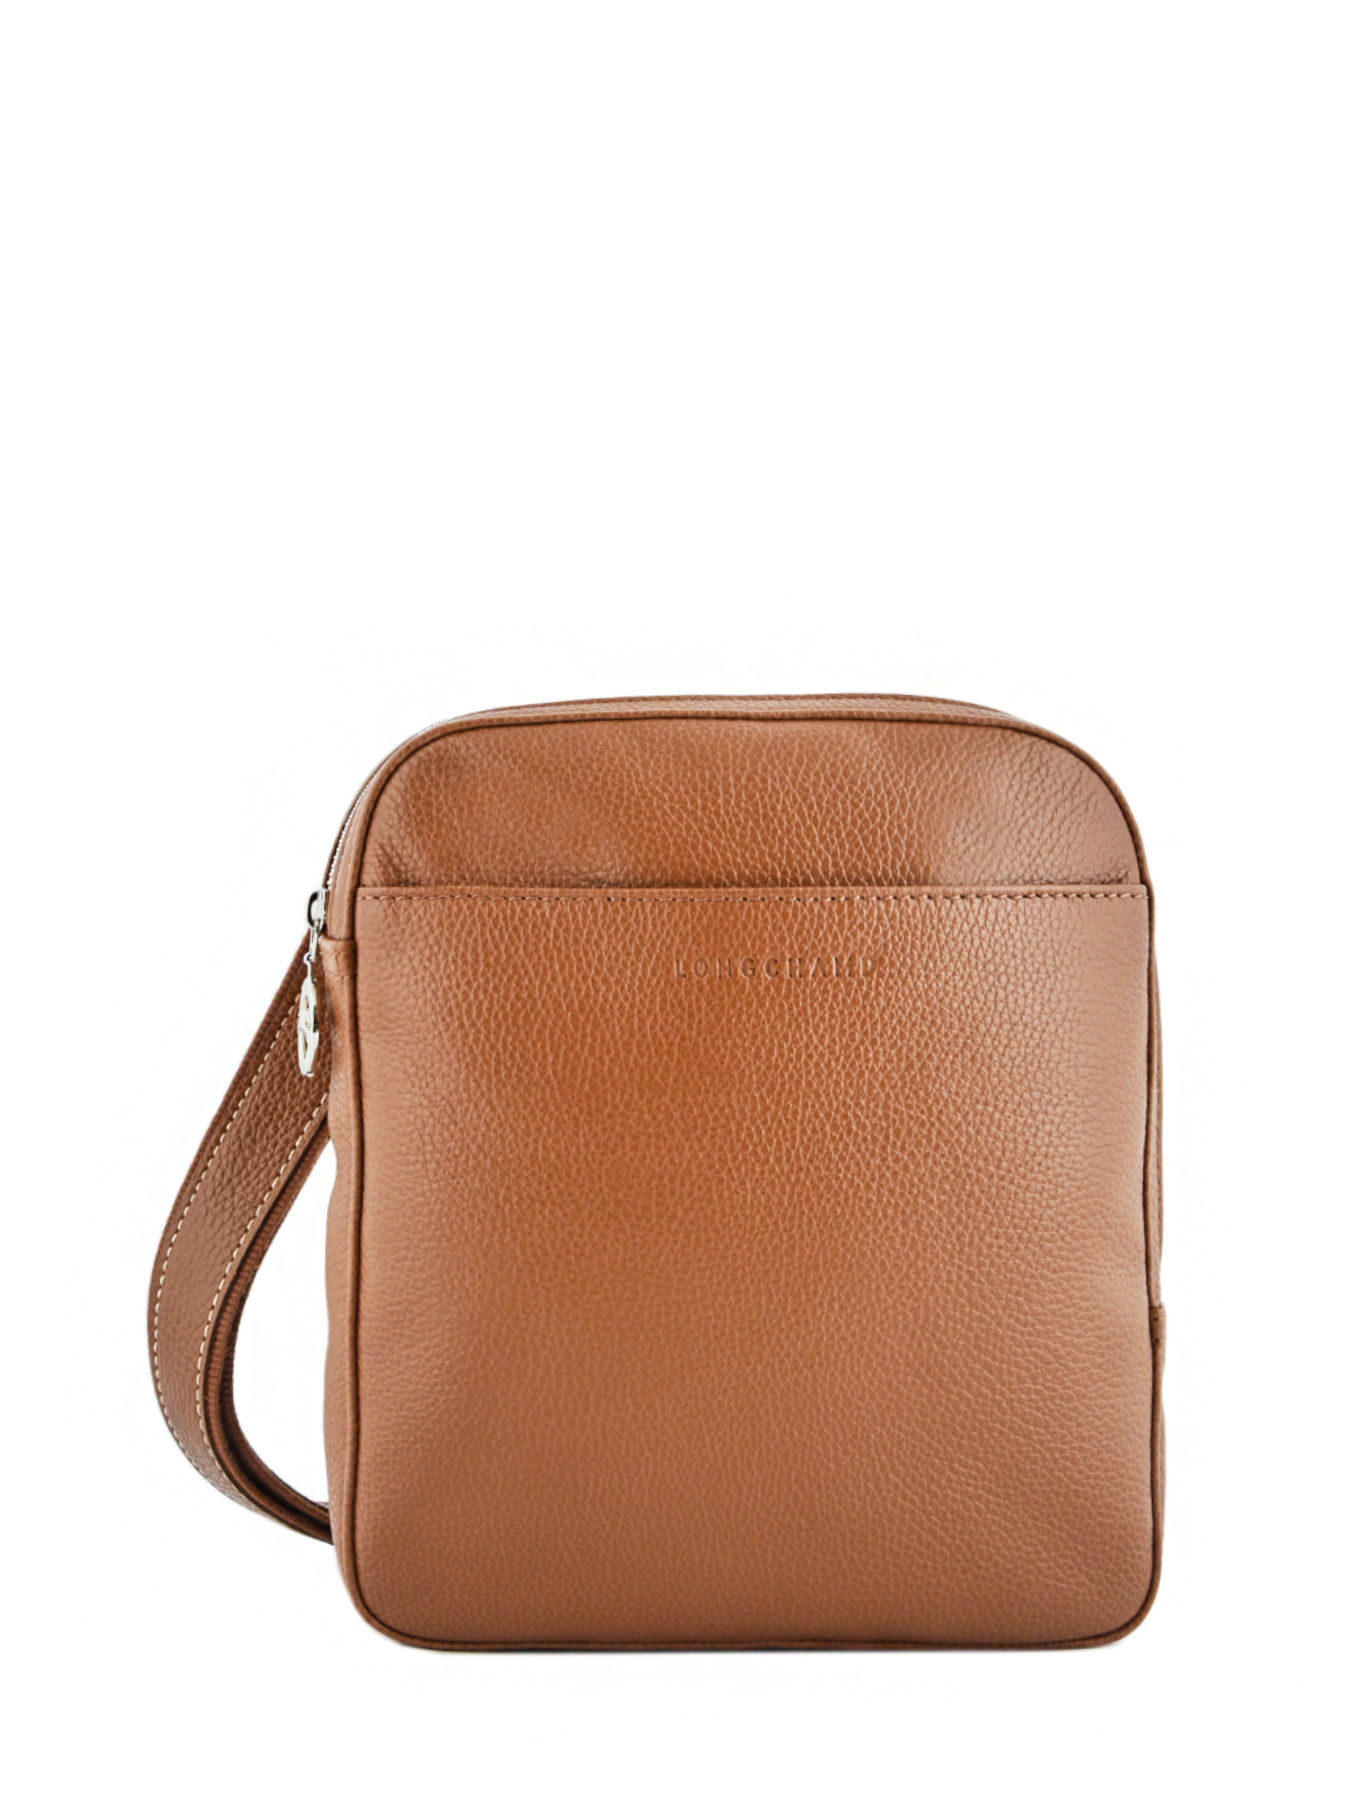 Longchamp Hobo bag 1712021 - best prices